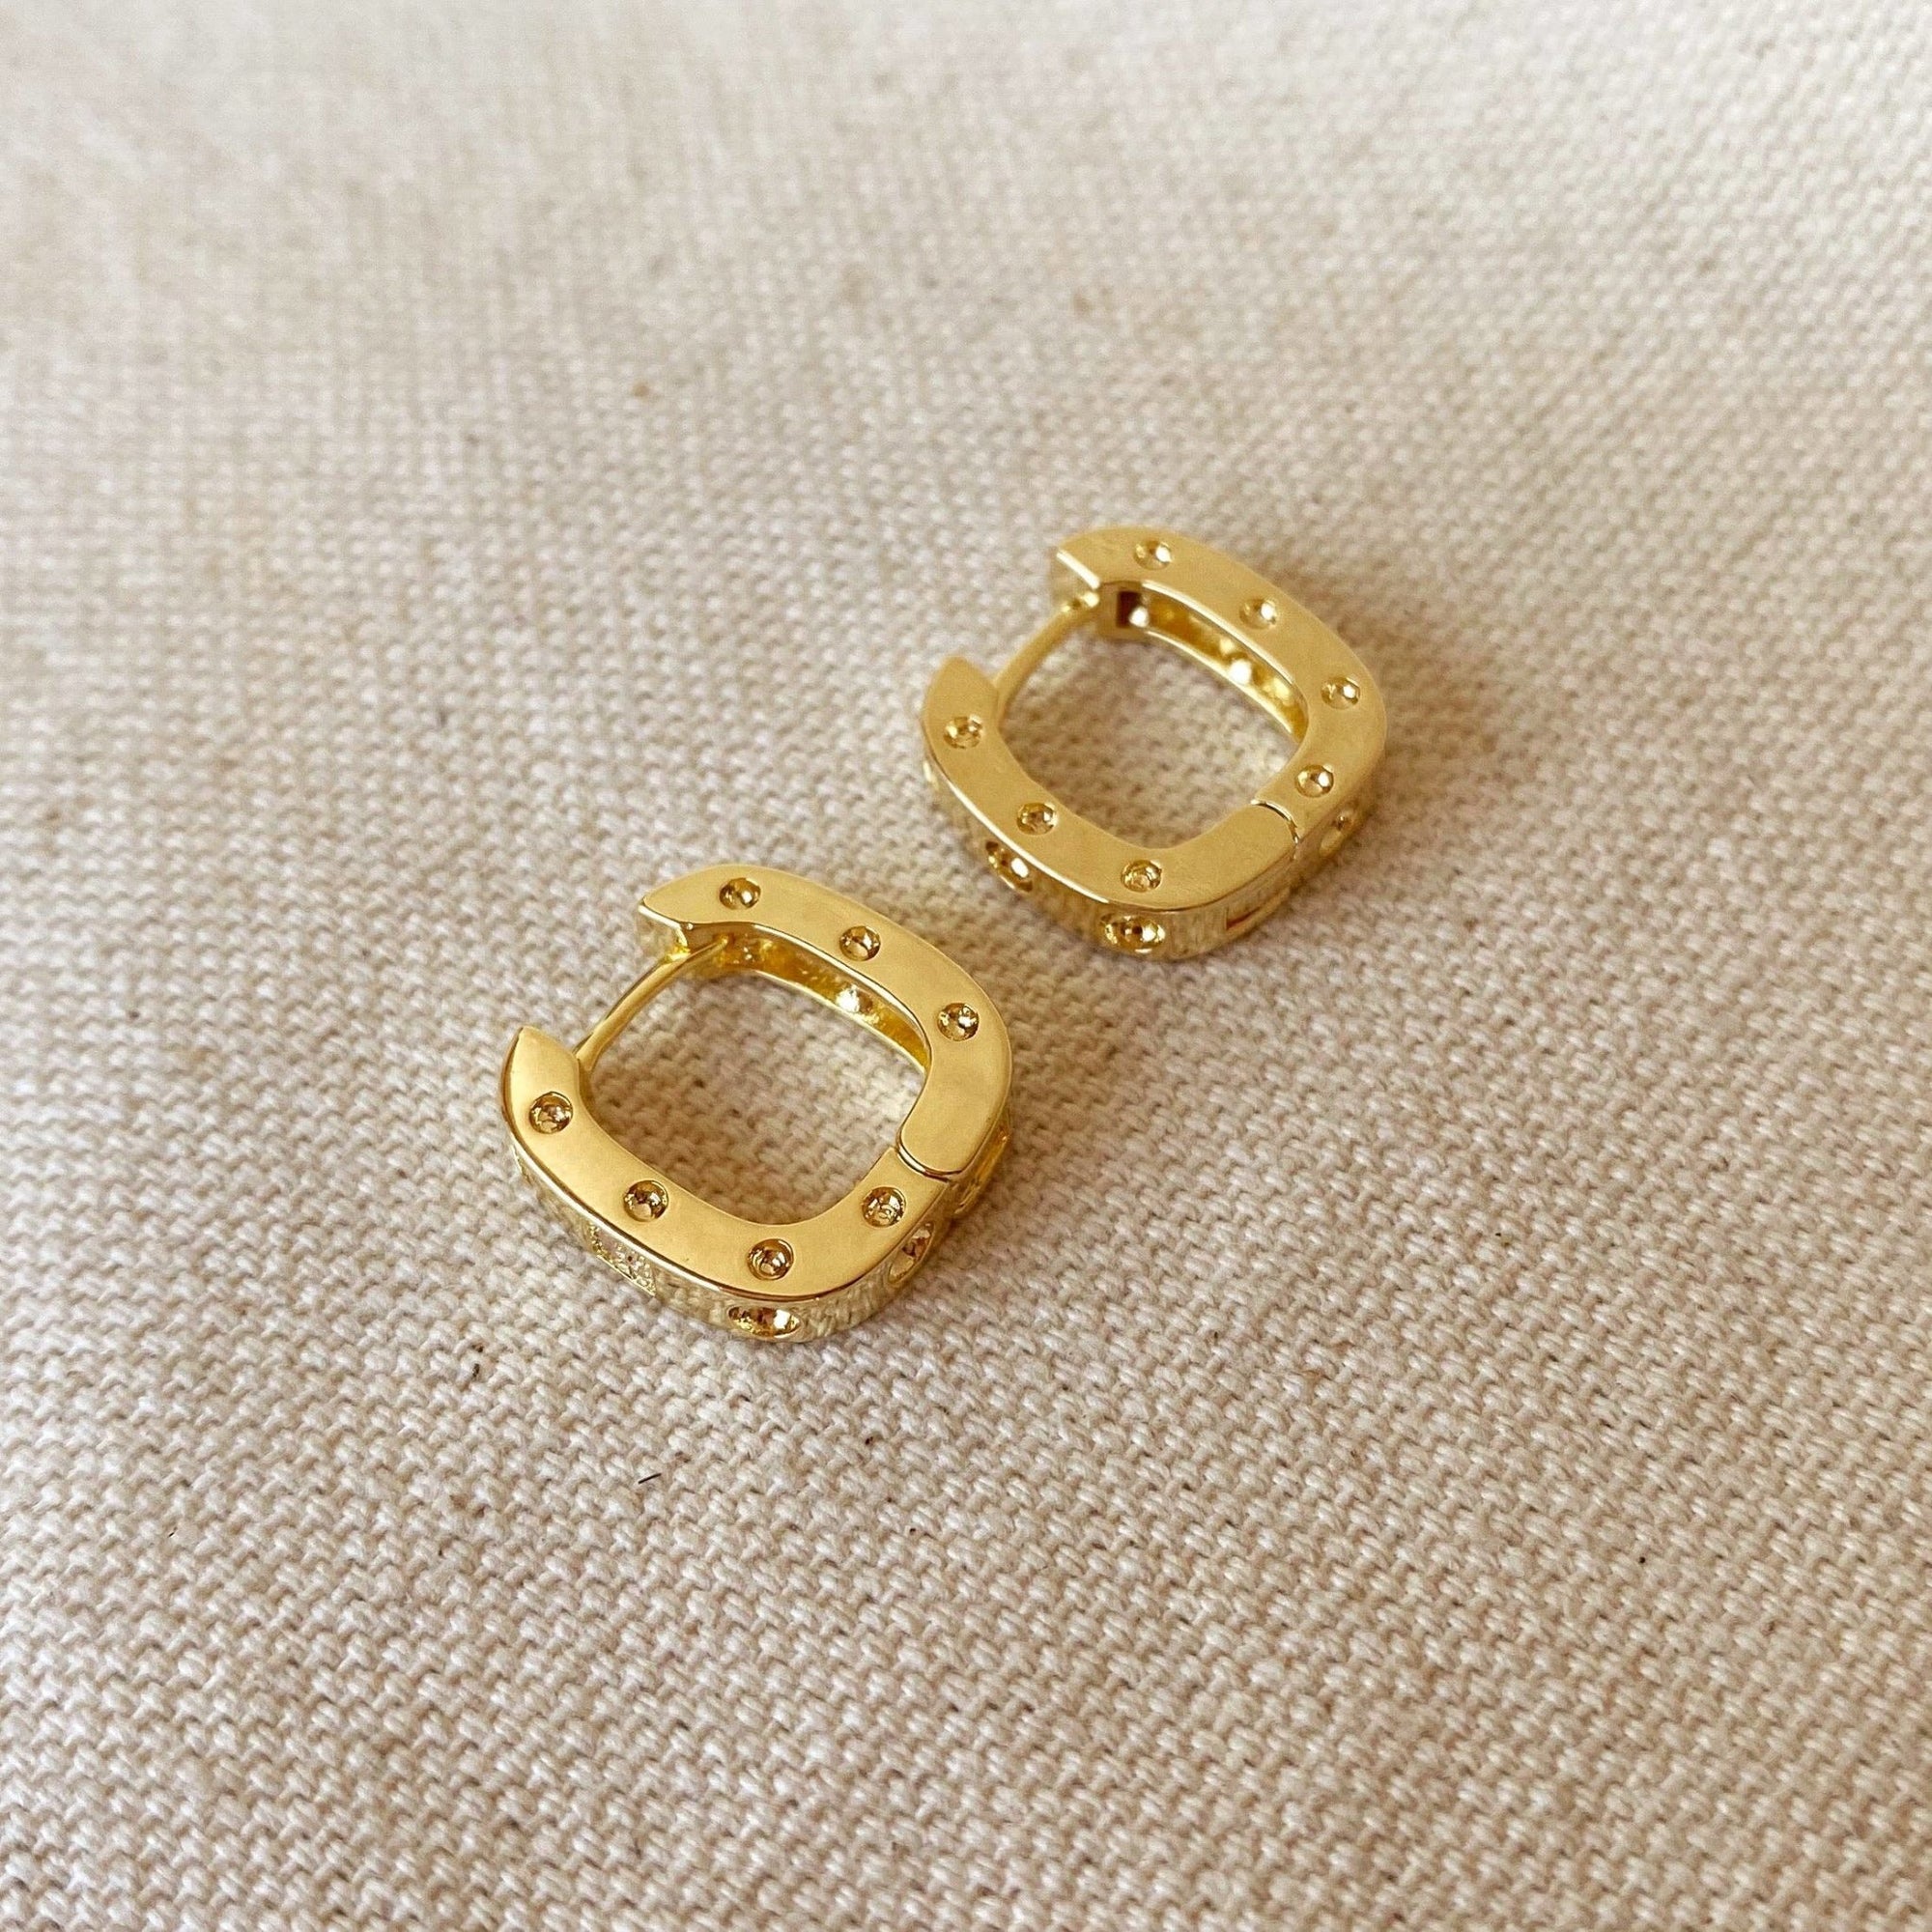 Small Rectangular CZ Hoop Earrings, 18k Gold Filled, Abigail Fox - Abigail Fox Designs